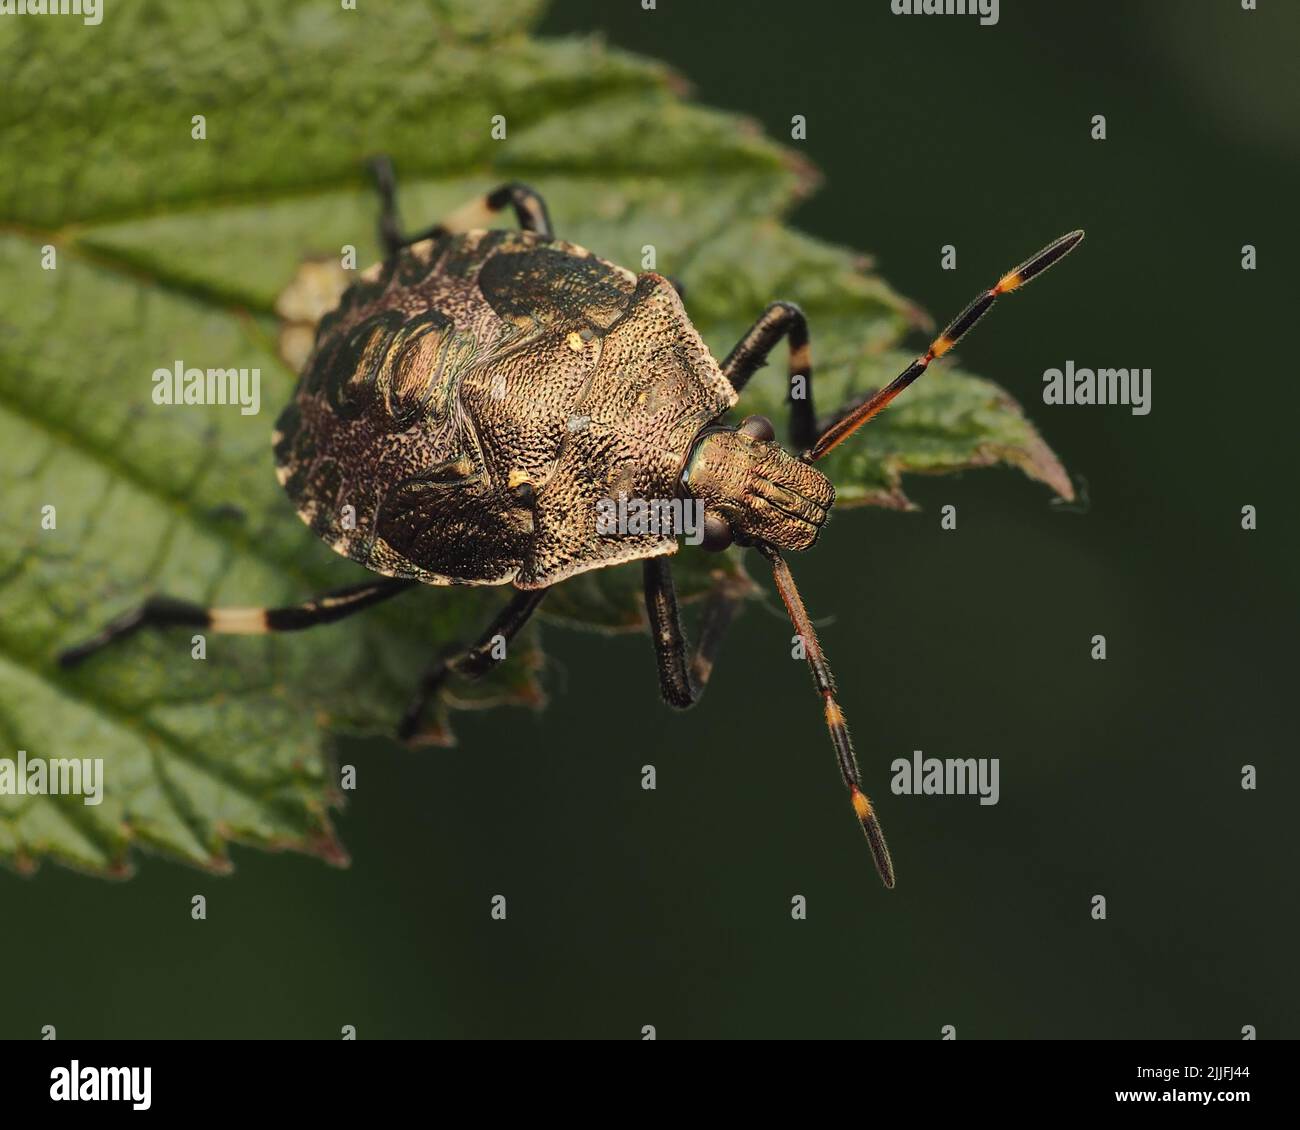 Spiked Shieldbug nymph (Picromerus bidens) on edge of bramble leaf Stock Photo